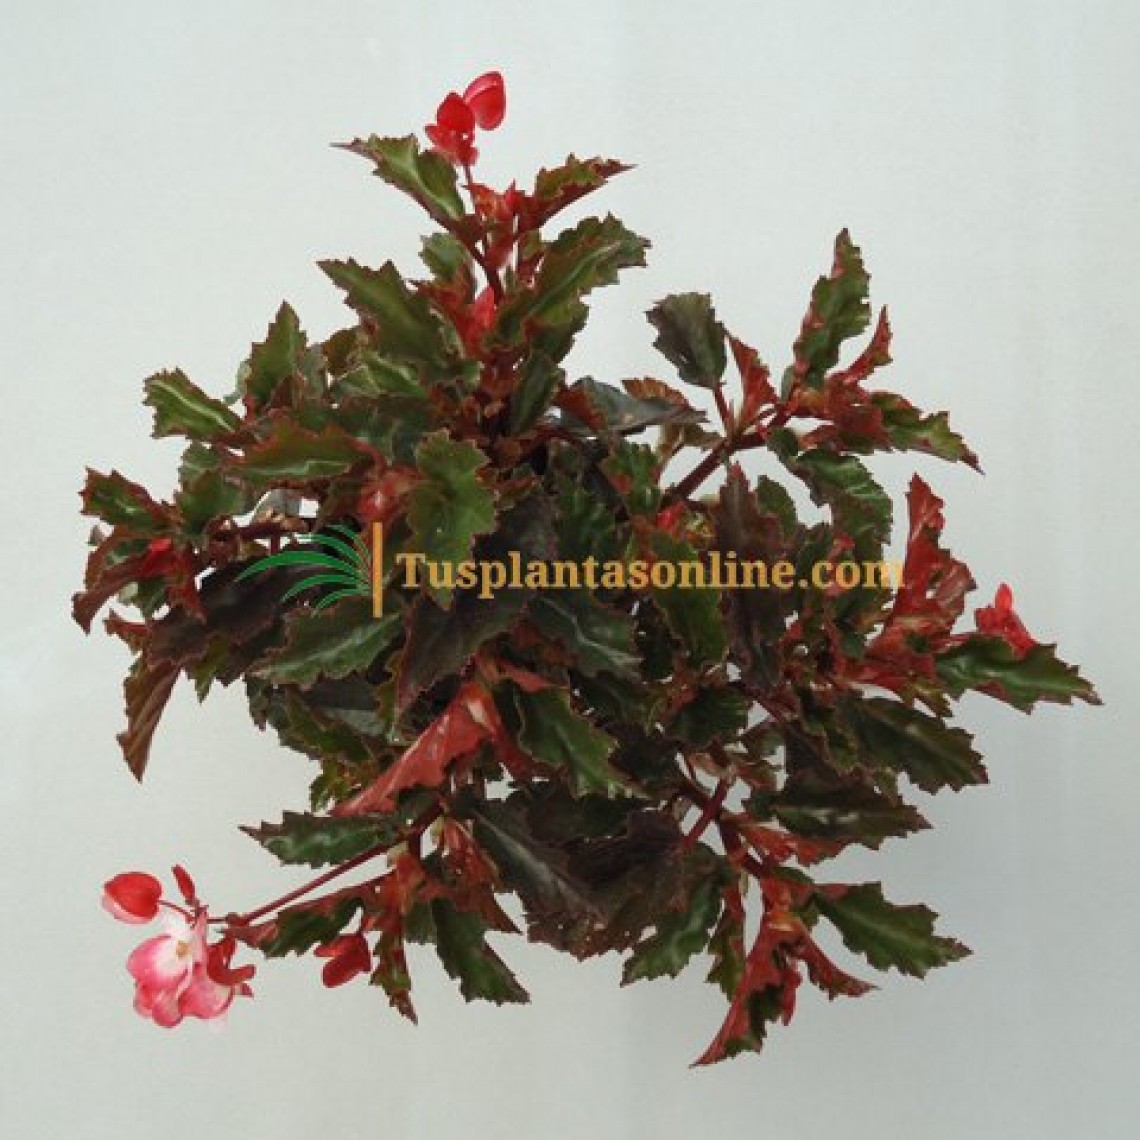 Begonia Begonia Tusplantasonline.com